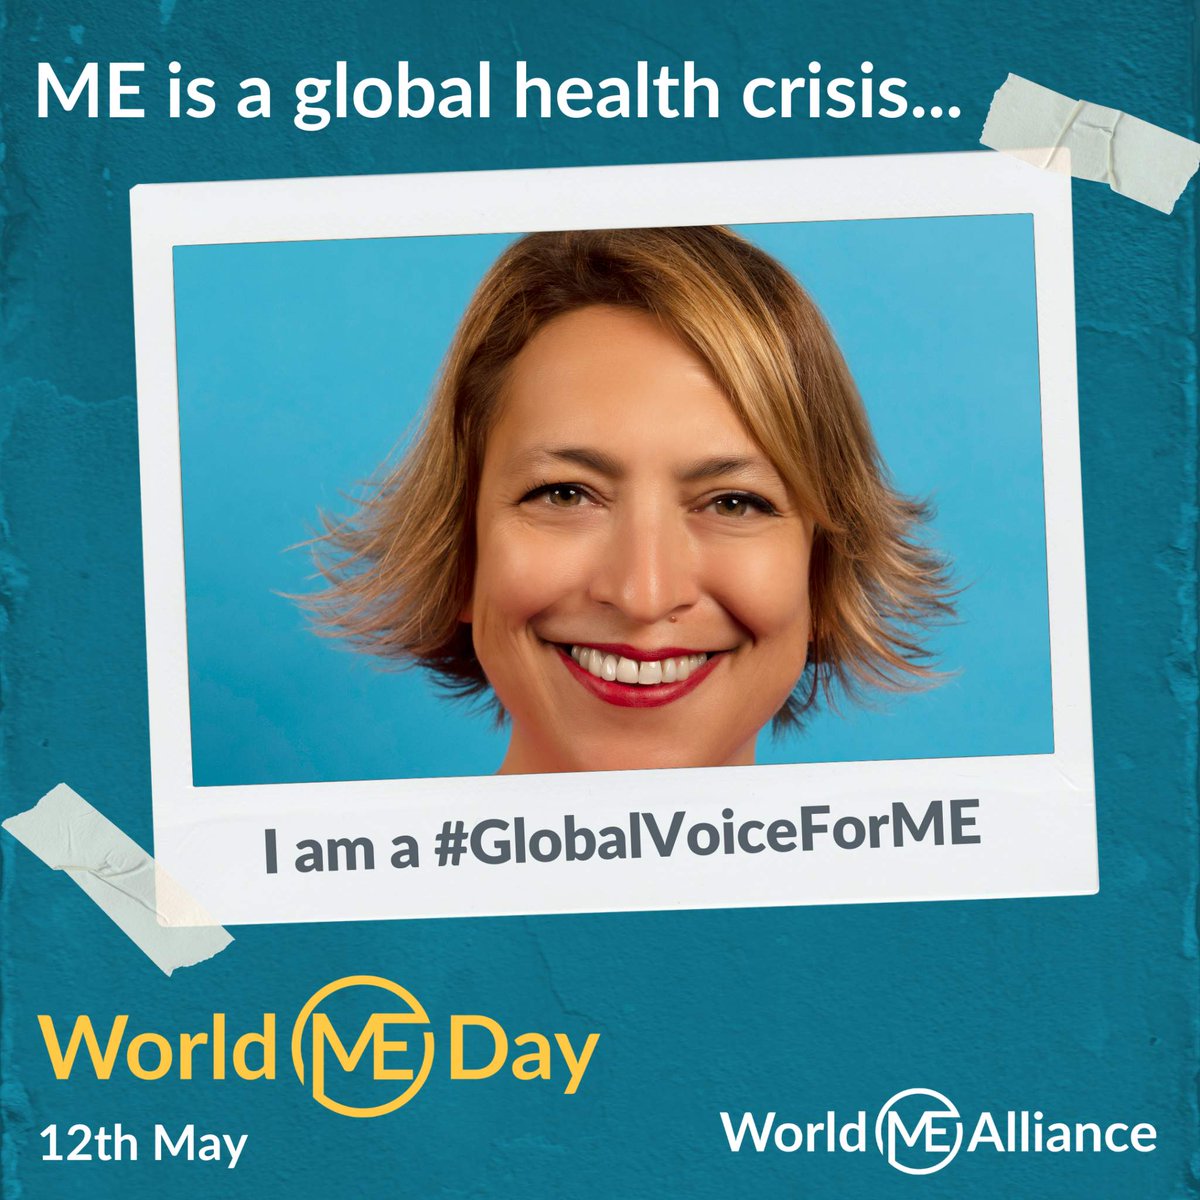 It's me up next sharing @actionforme advocacy and policy work #MECFS #WorldMEDay #MyalgicEncephalomyelitis #LongCovid @actionforme #GlobalVoiceforME